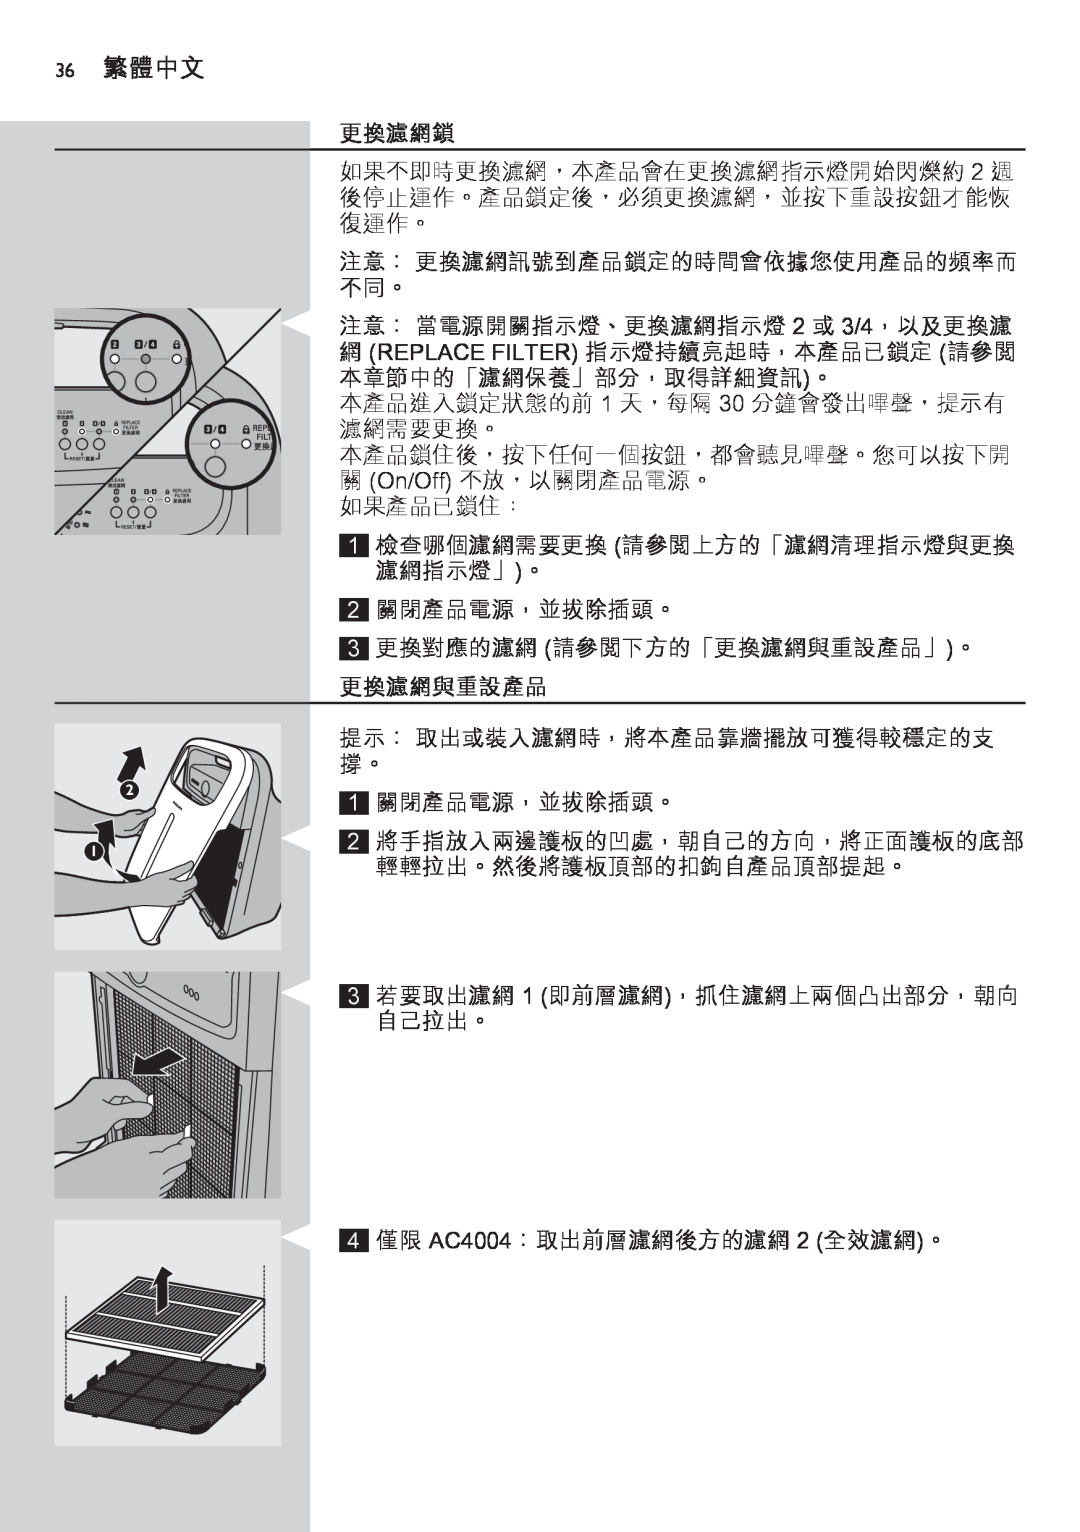 Philips AC4002 manual 36 繁體中文, 更換濾網鎖, 更換濾網與重設產品 